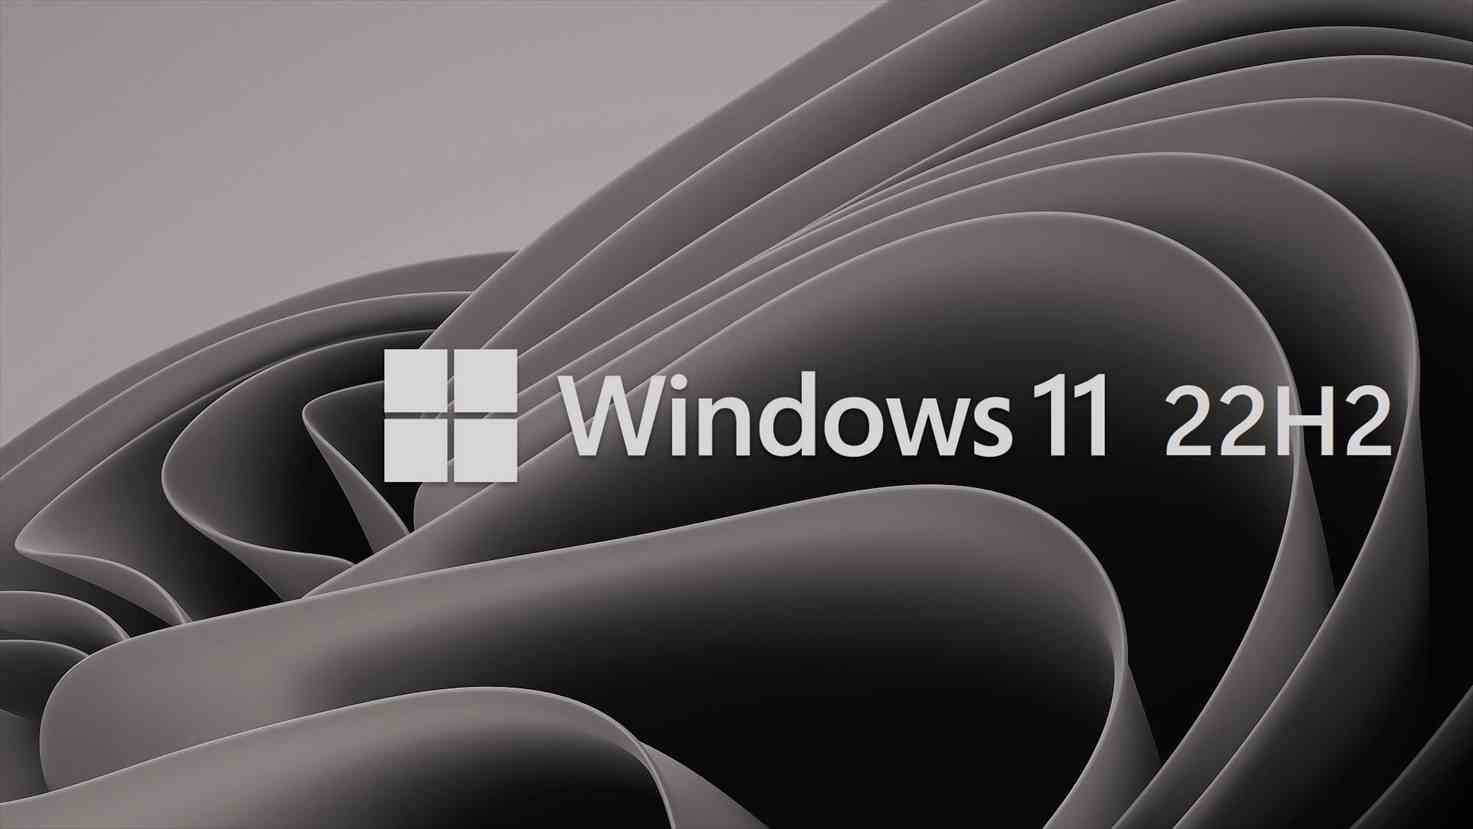 Windows11wallpaper_1920x1080 22H2